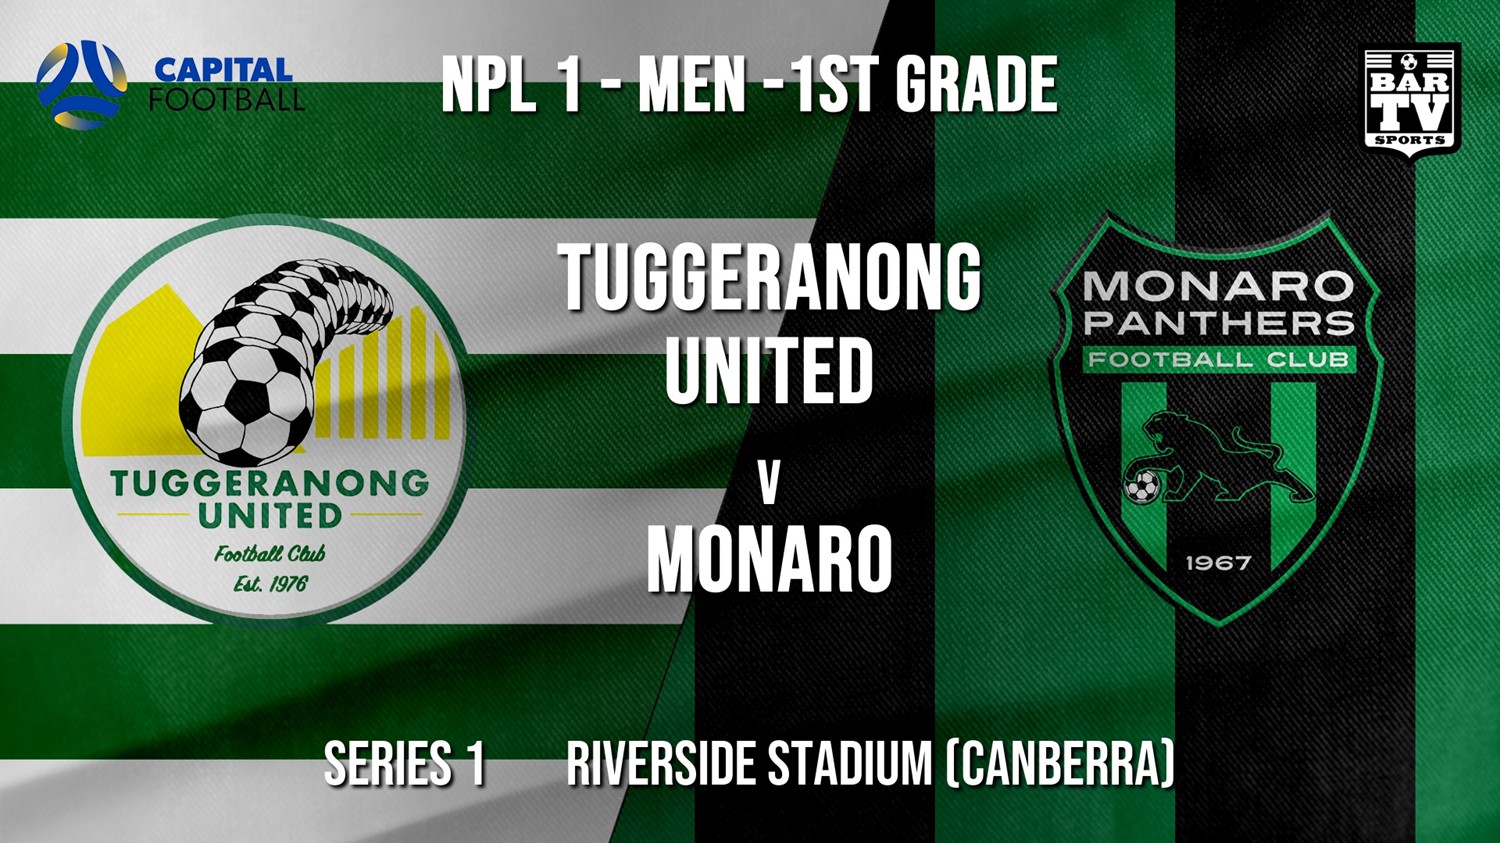 NPL - CAPITAL Series 1 - Tuggeranong United FC v Monaro Panthers FC Minigame Slate Image